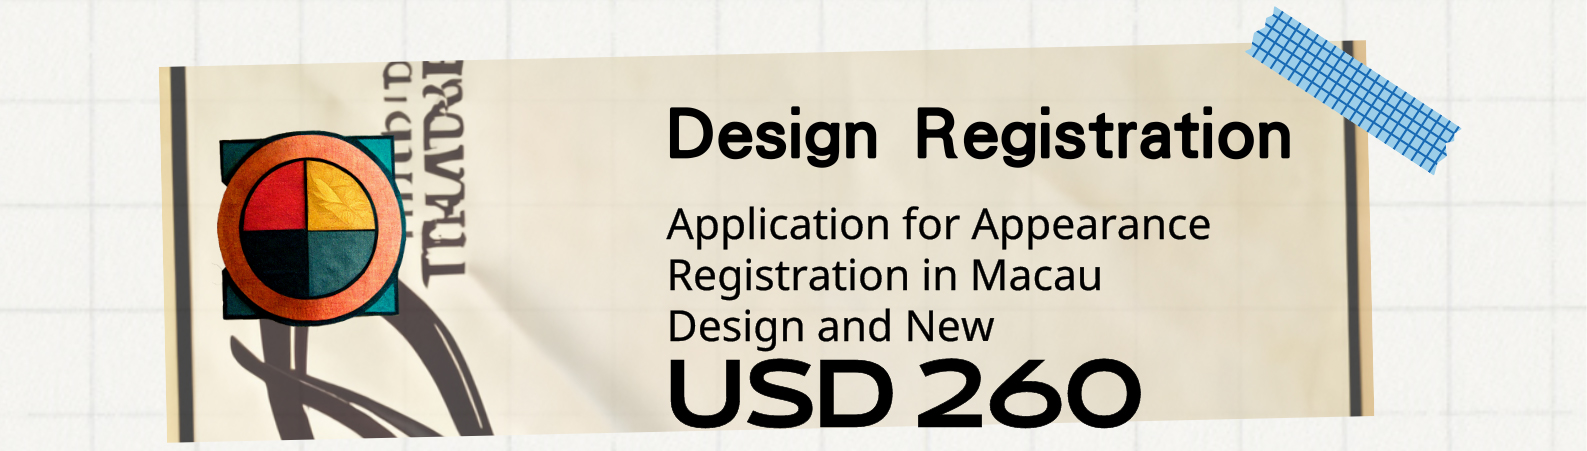 Macau Design Registration